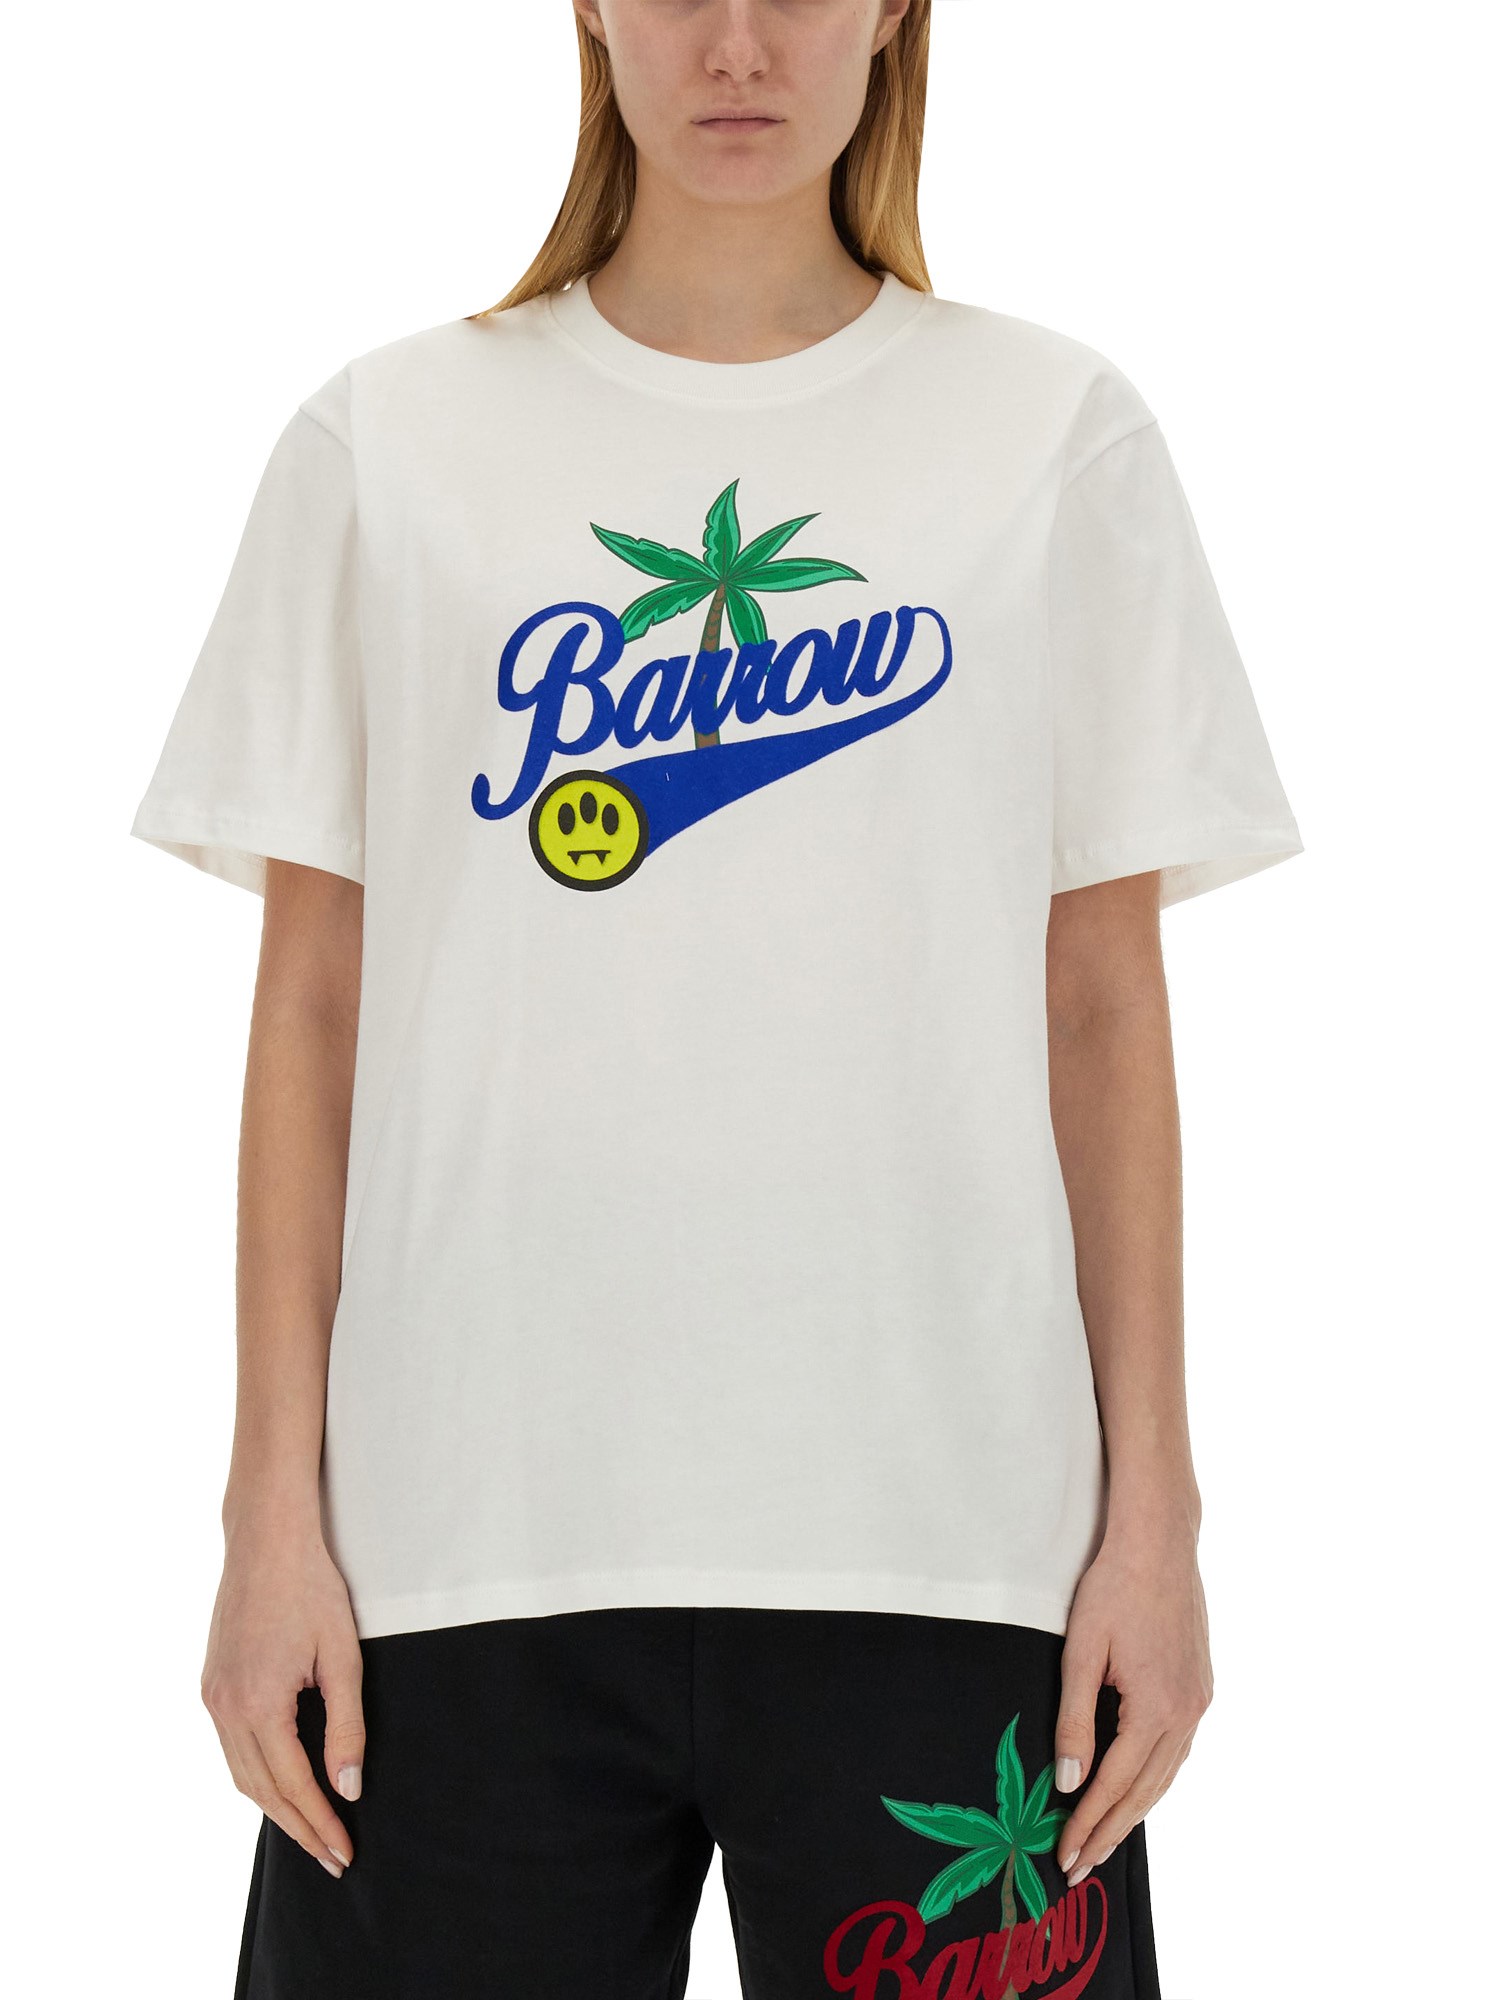 Barrow barrow t-shirt with logo